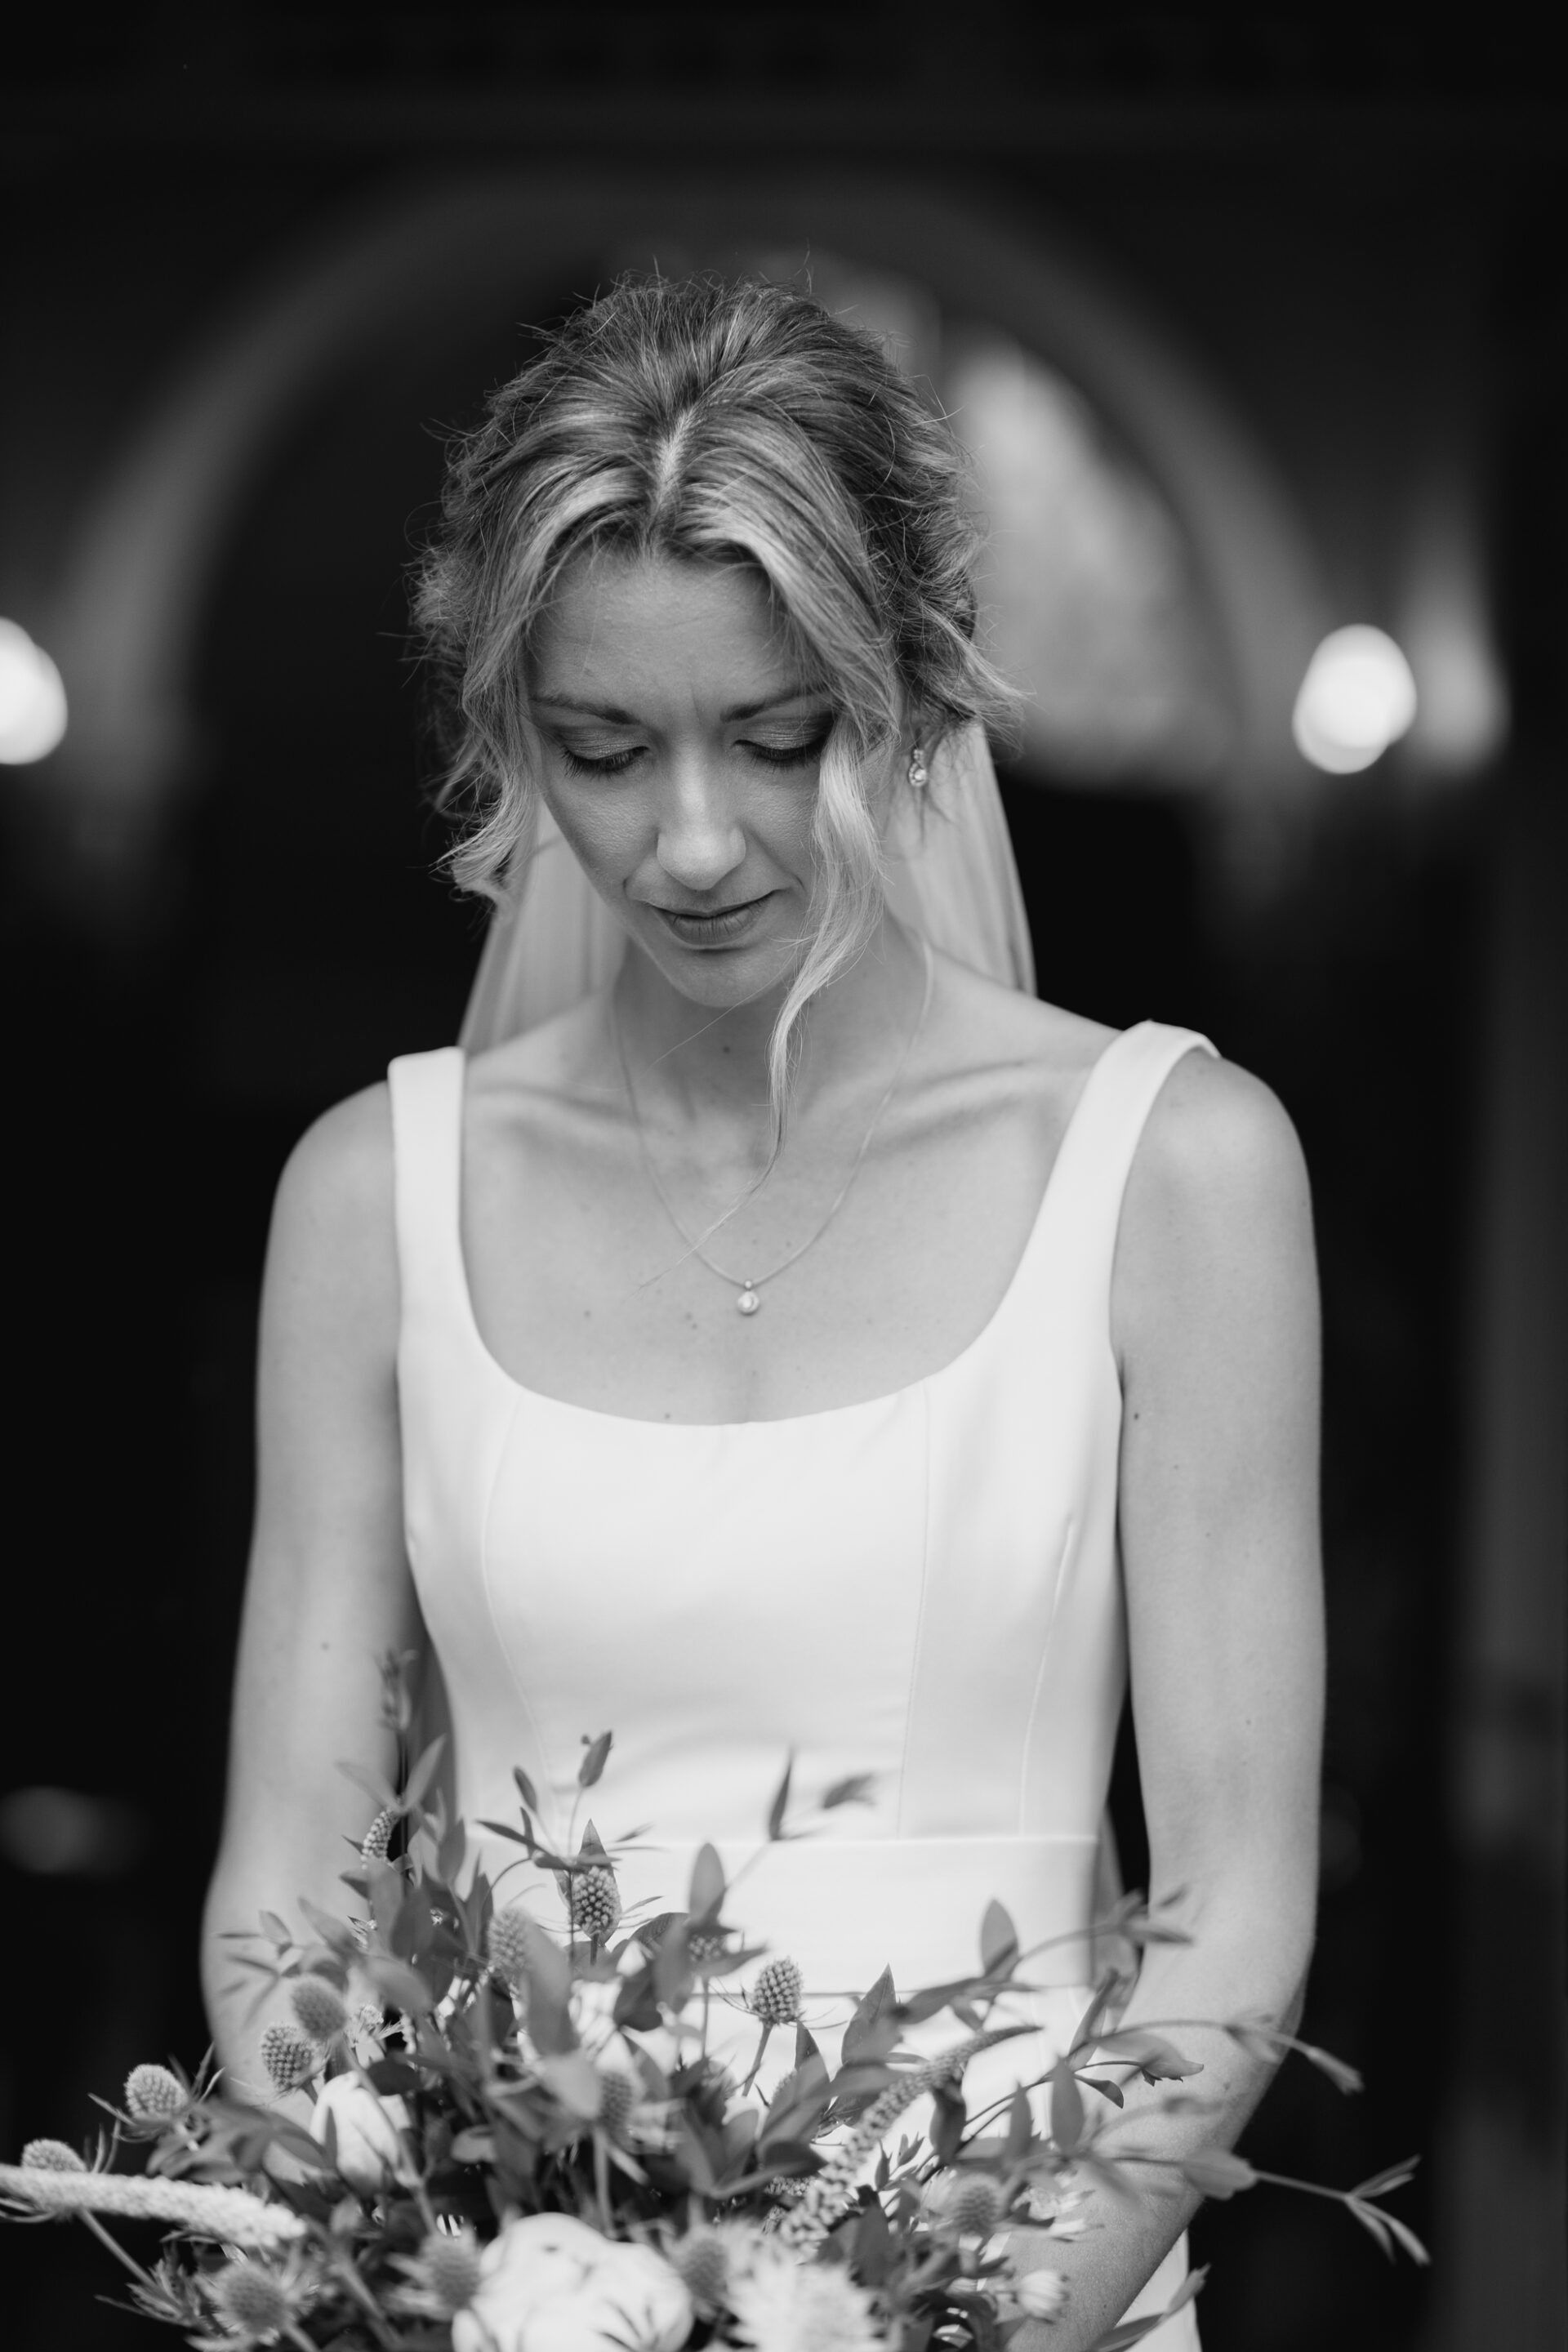 The bride admires her wedding flowers